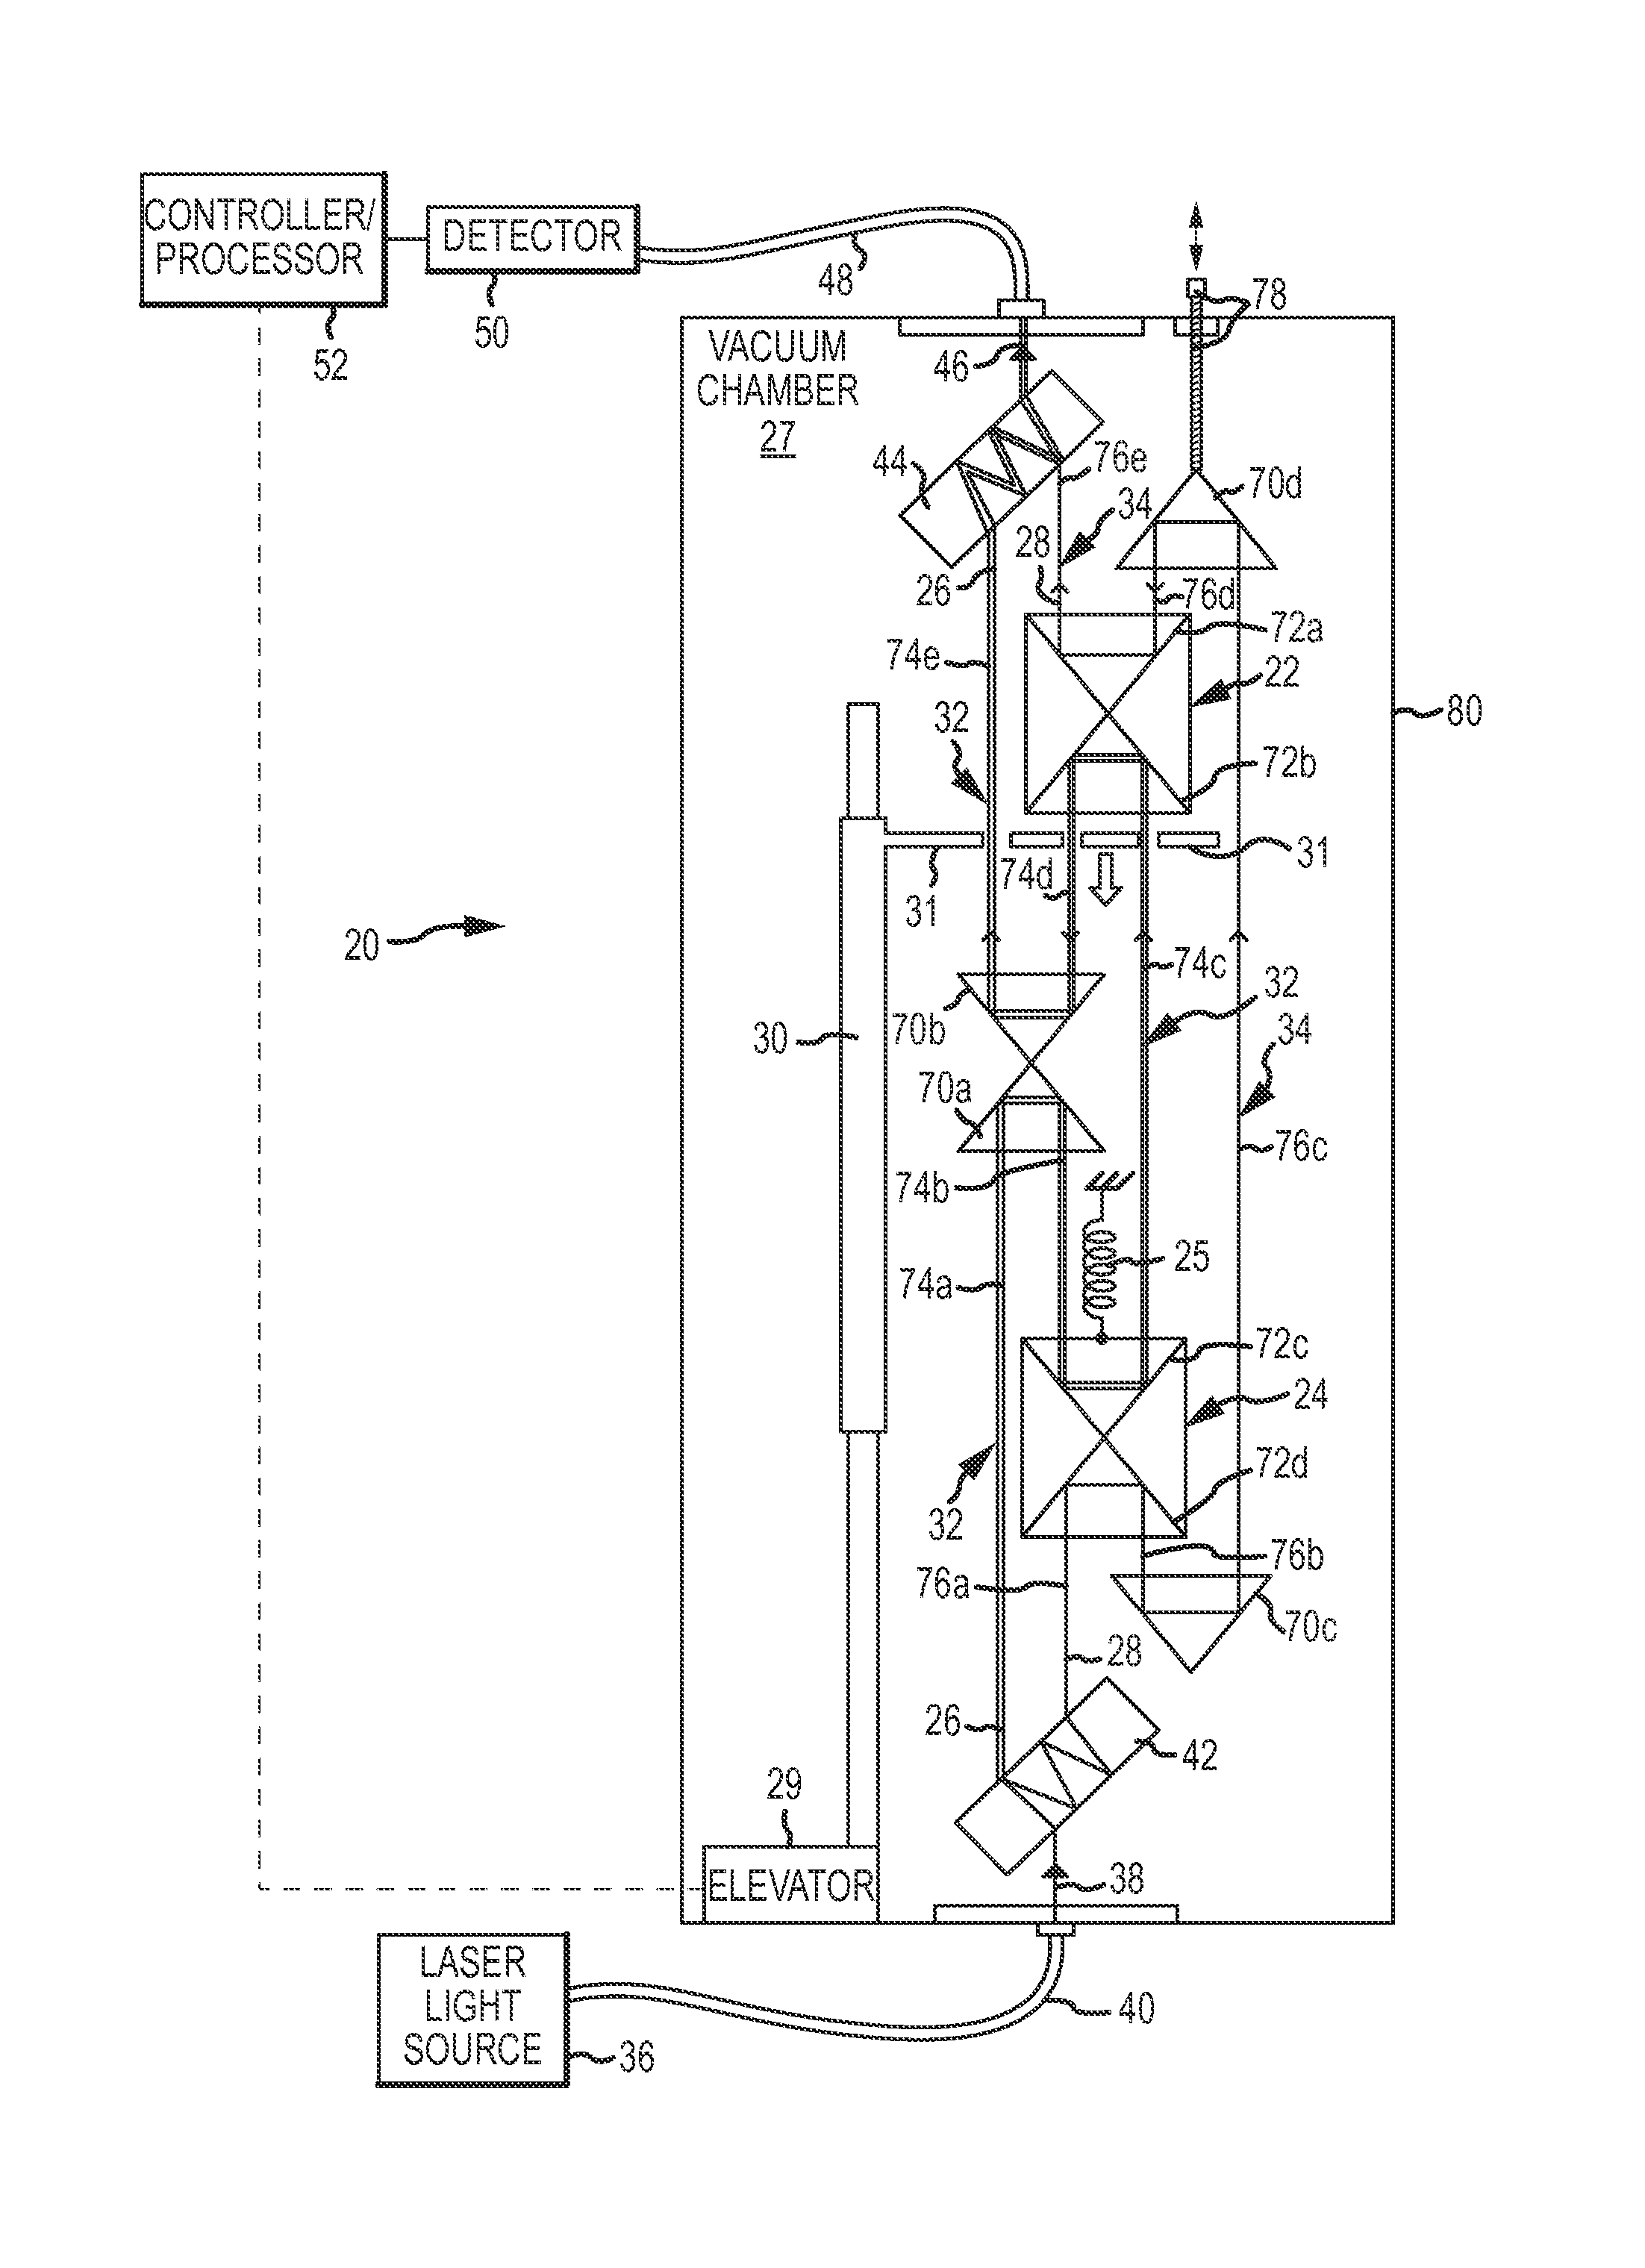 Interferometric Gravimeter Apparatus and Method